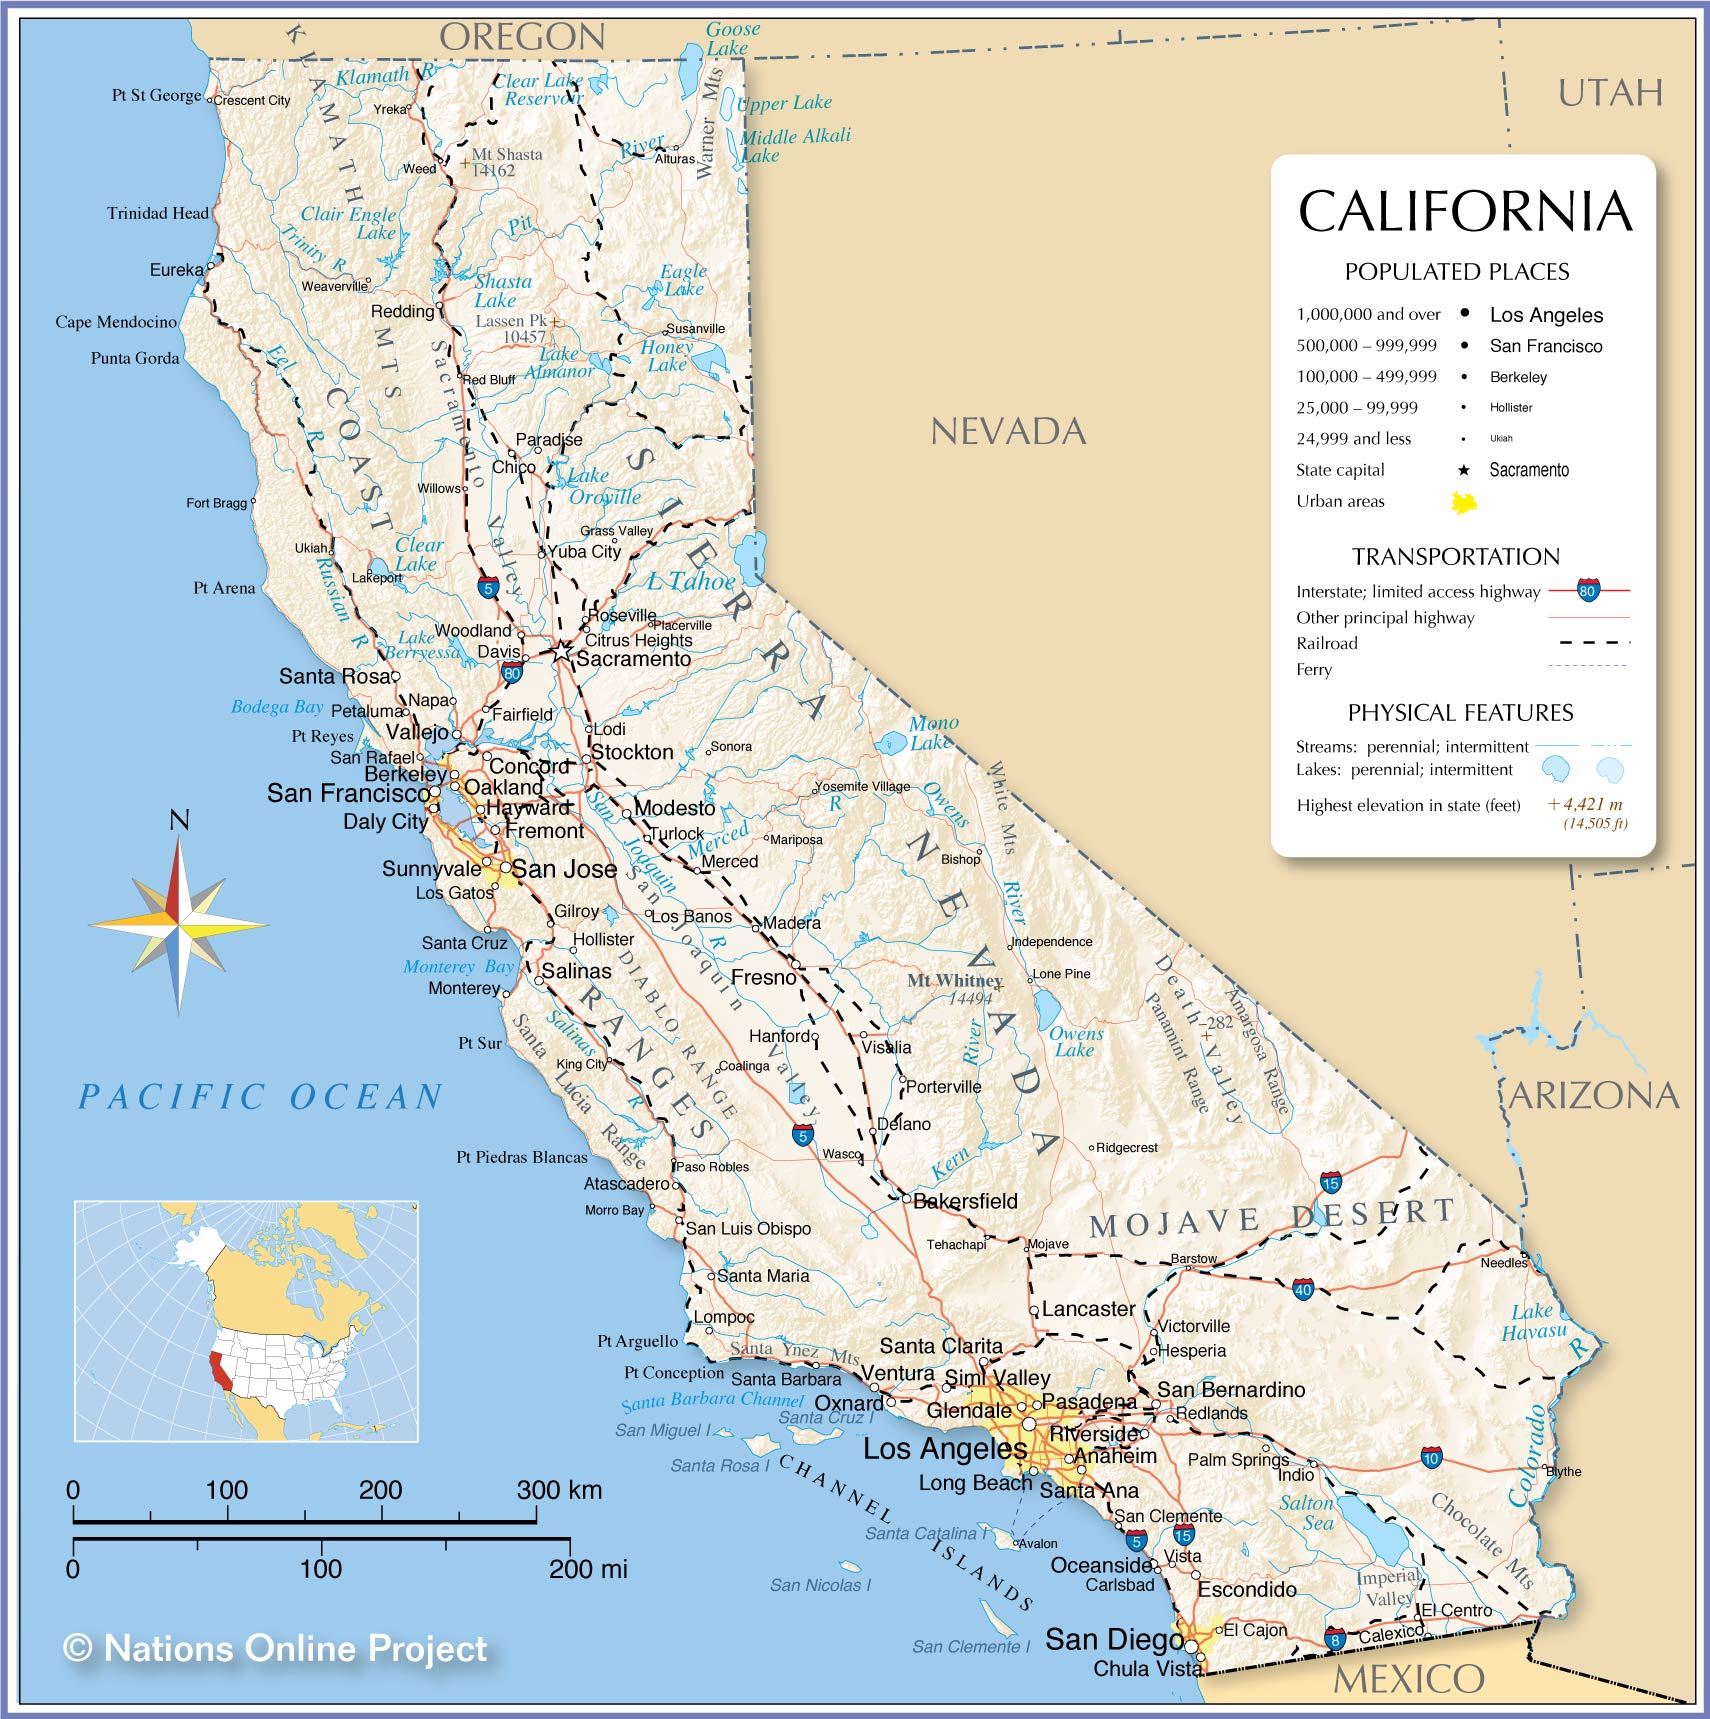 www.nationsonline.org/maps/USA/California_map.jpg